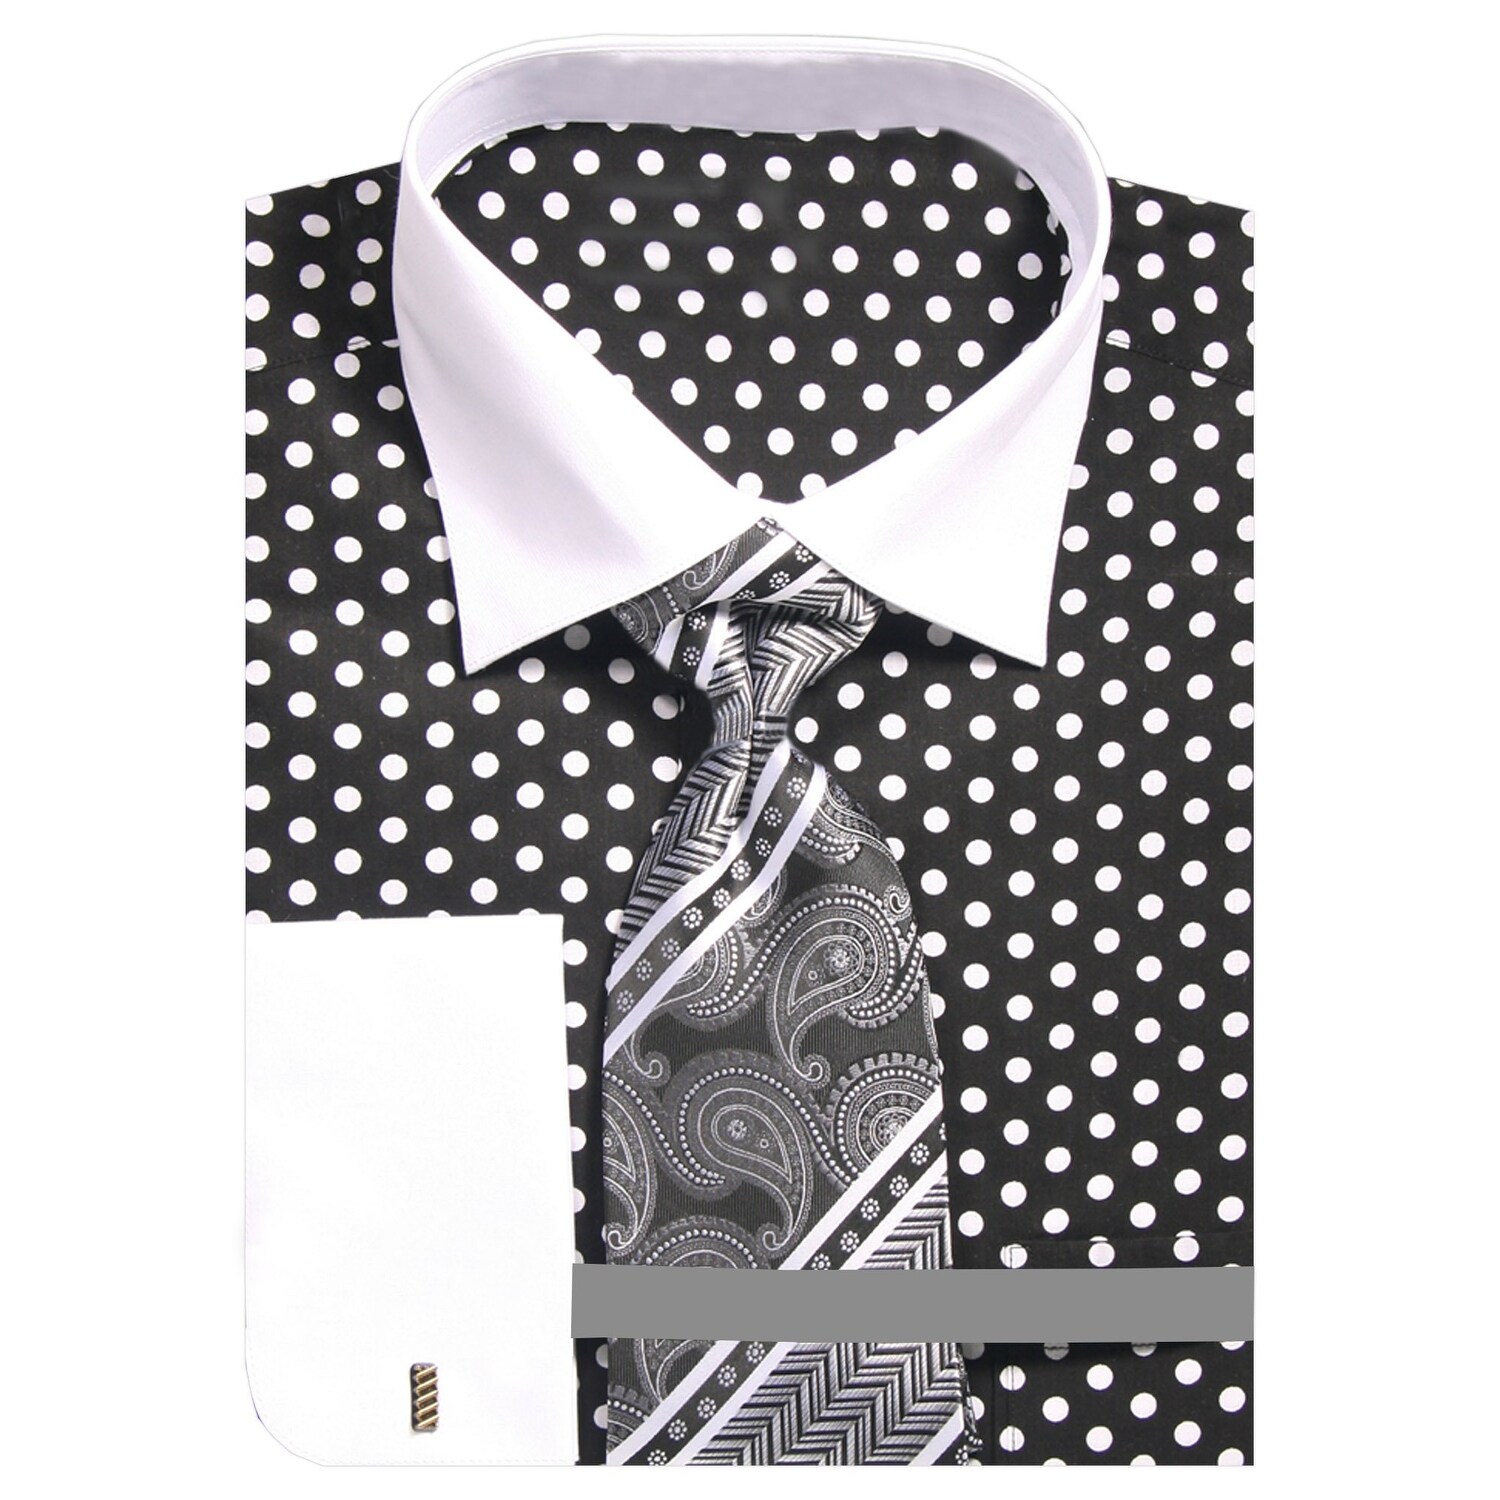 black and white polka dot dress shirt mens